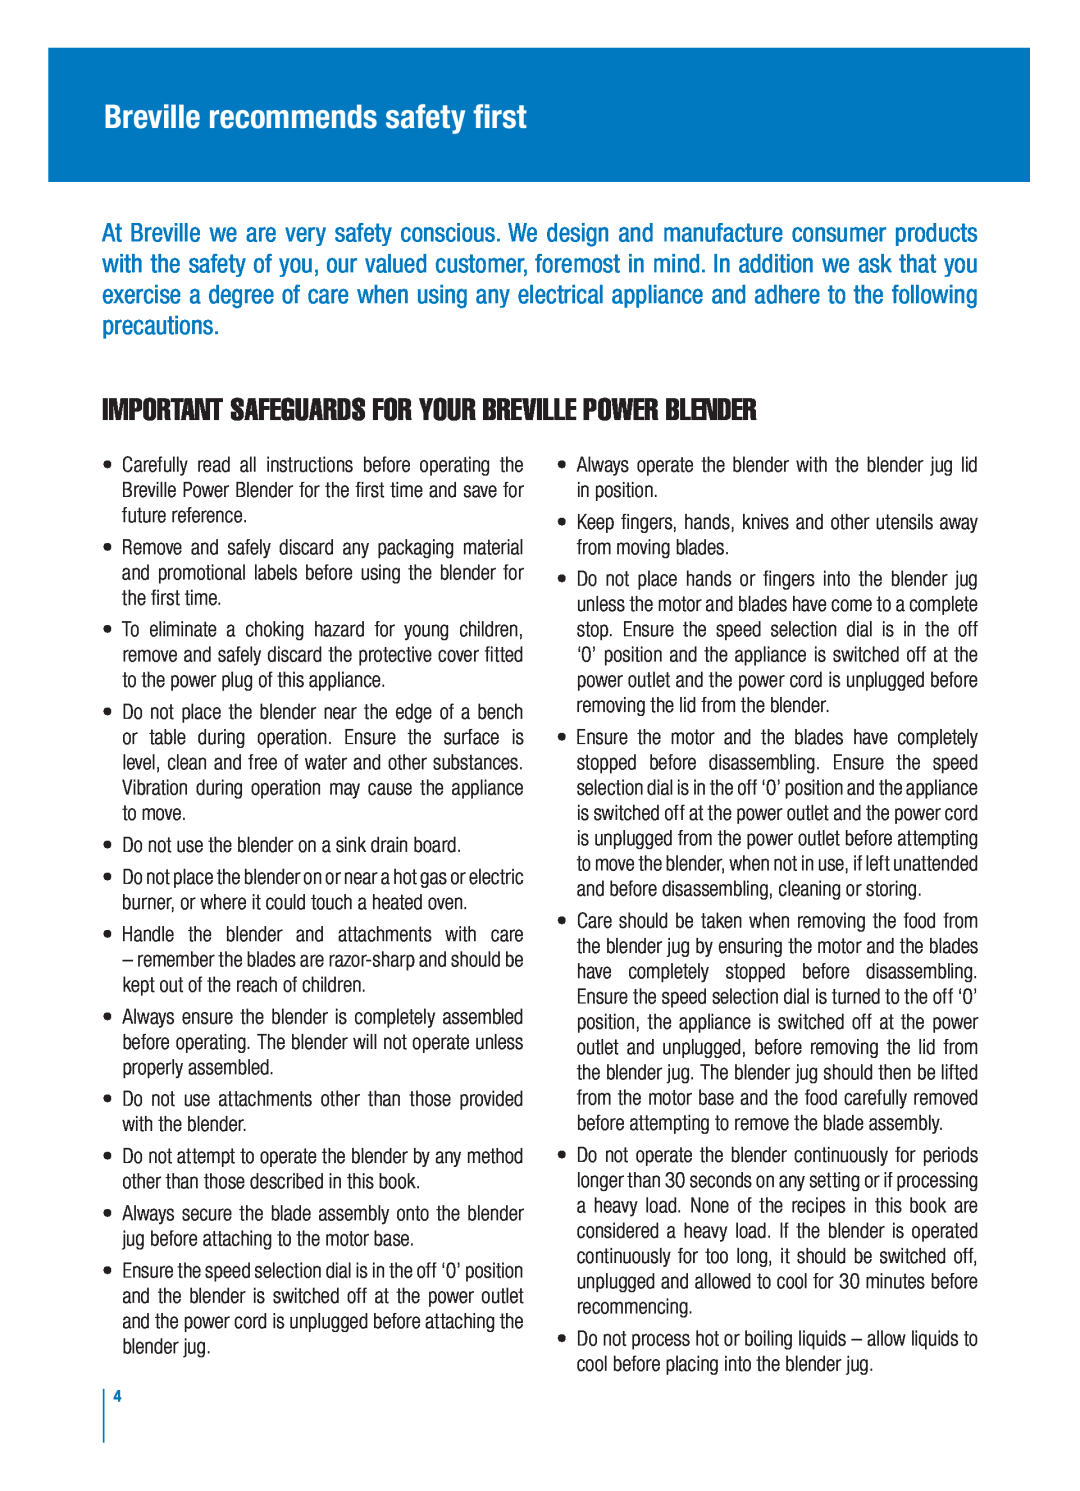 Breville BBL300 manual Breville recommends safety first, IMPORTANT SAFEGUARDS FOR YOUR BREVILLE power blender 